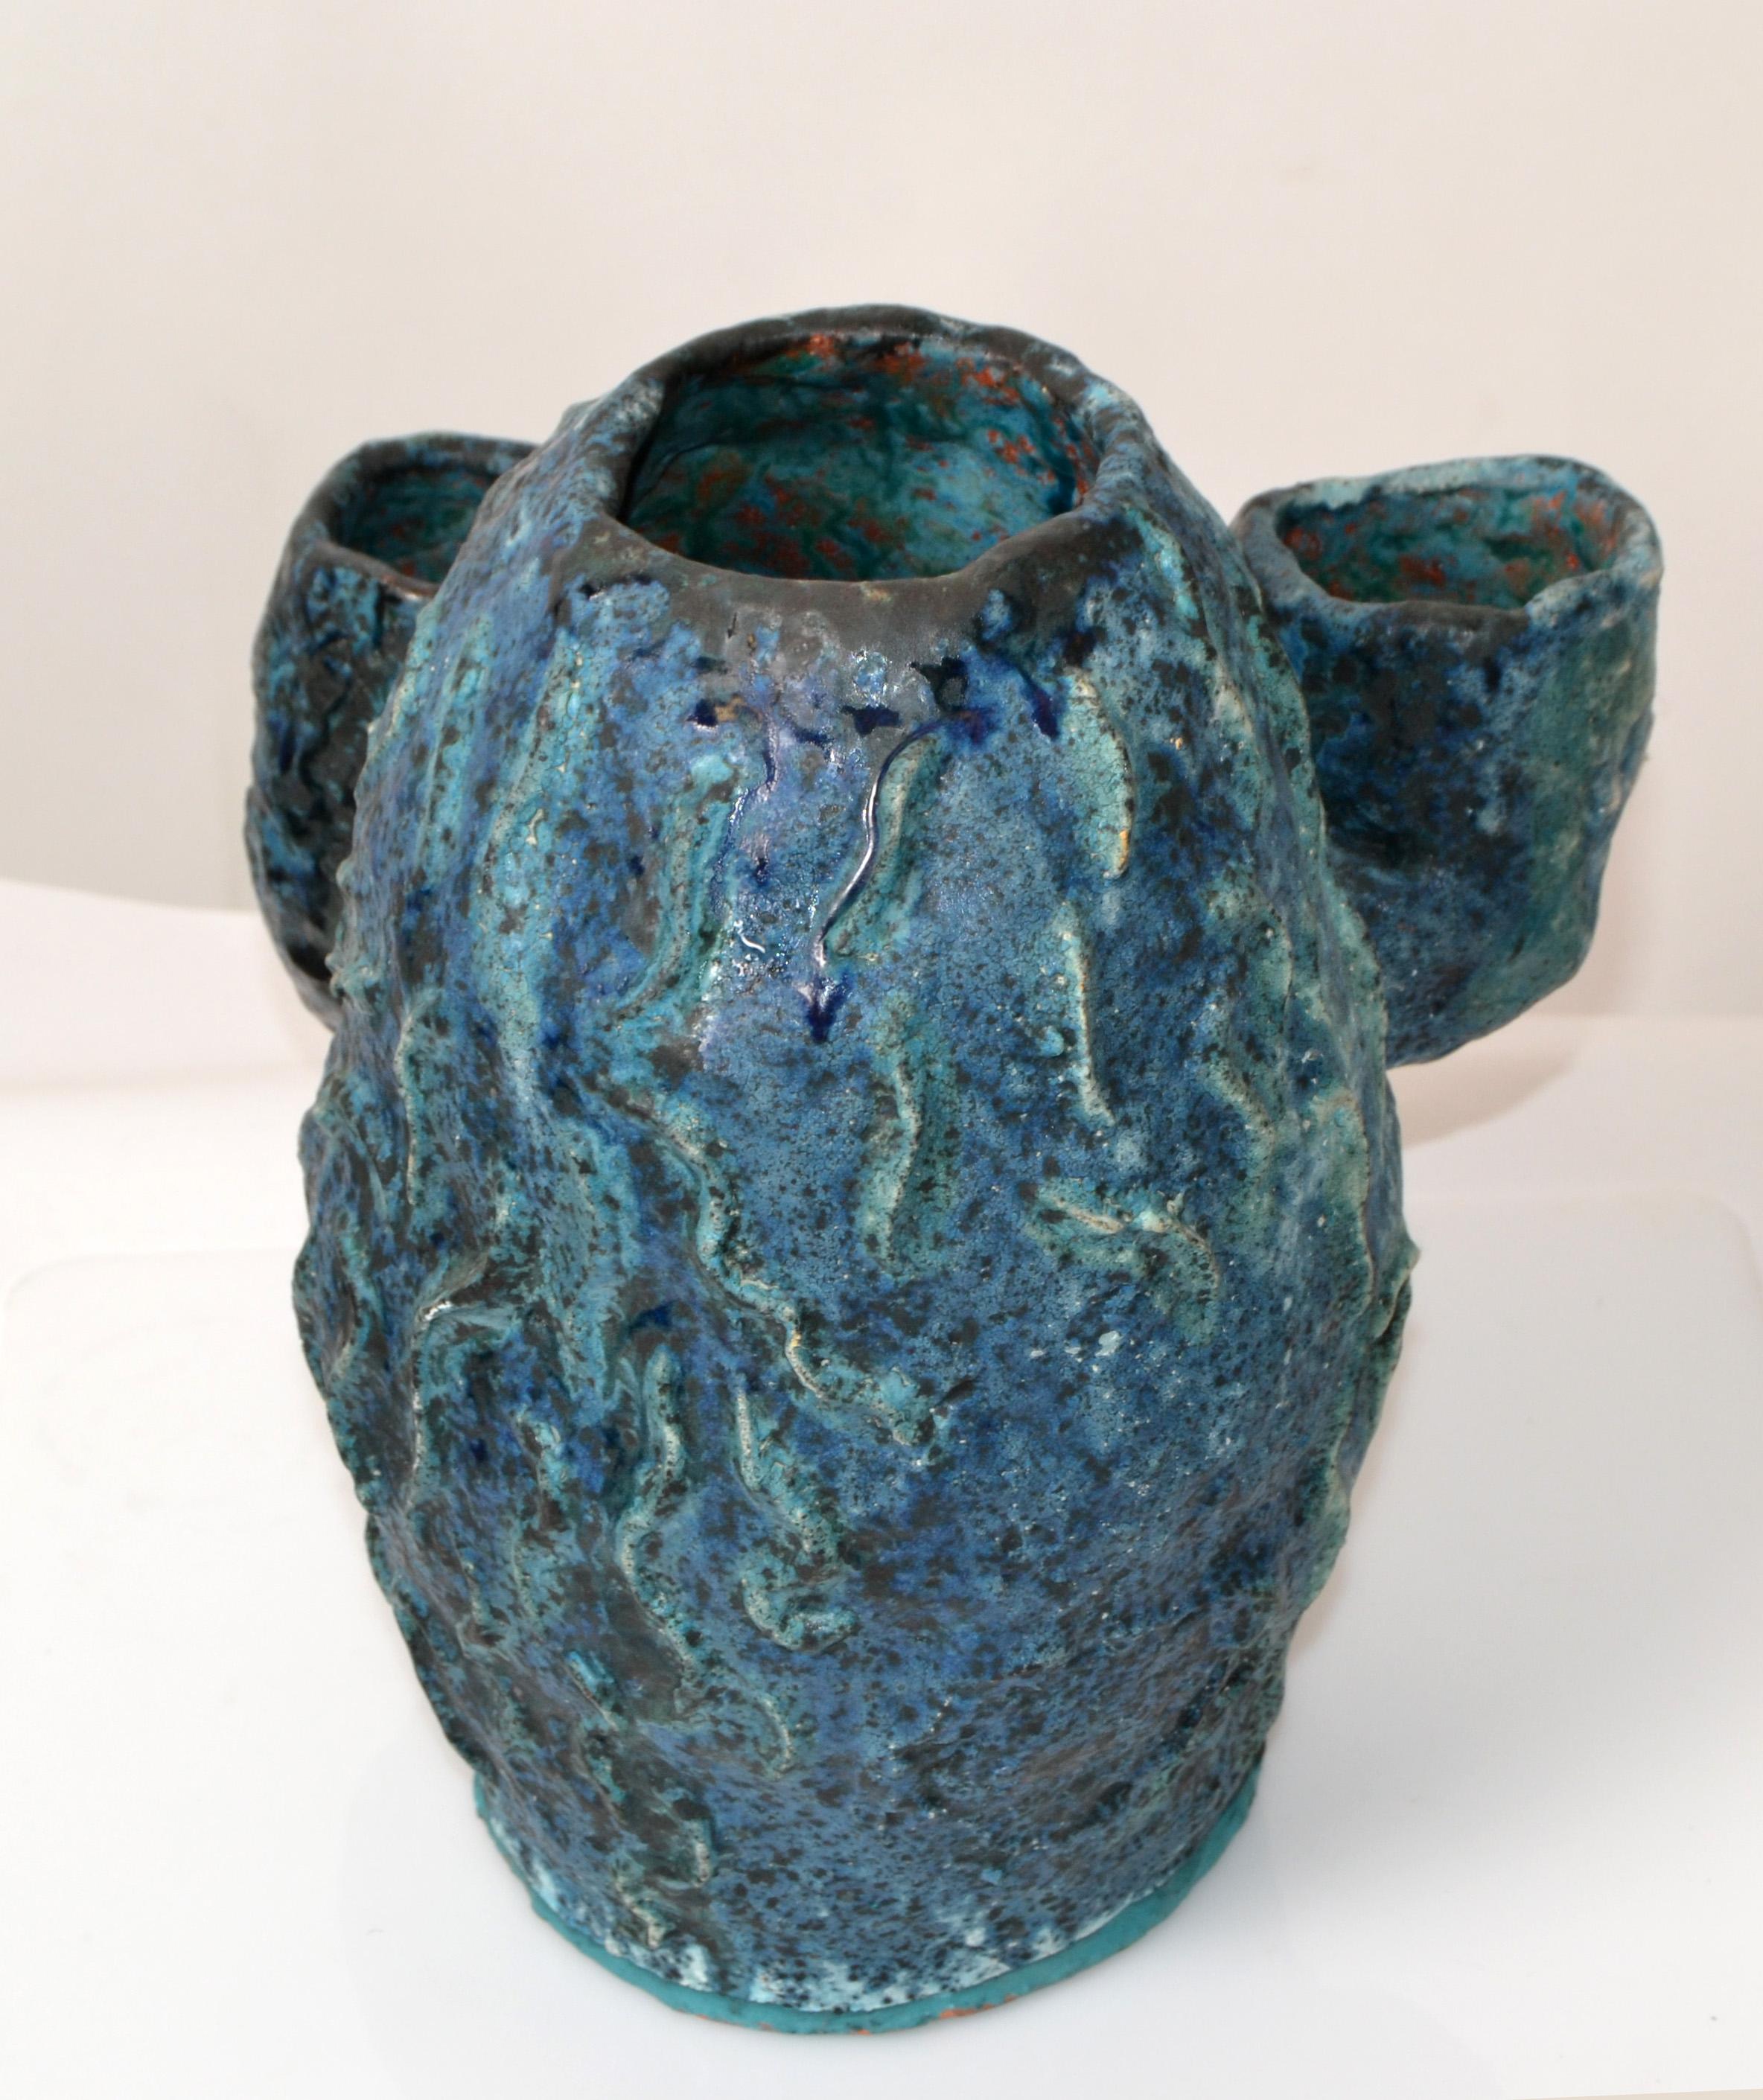 Vintage earthenware handcrafted Hues of blue studio piece with drip glaze vase, planter, vessel.
Pottery Art in superb craftsmanship.
No Markings found.